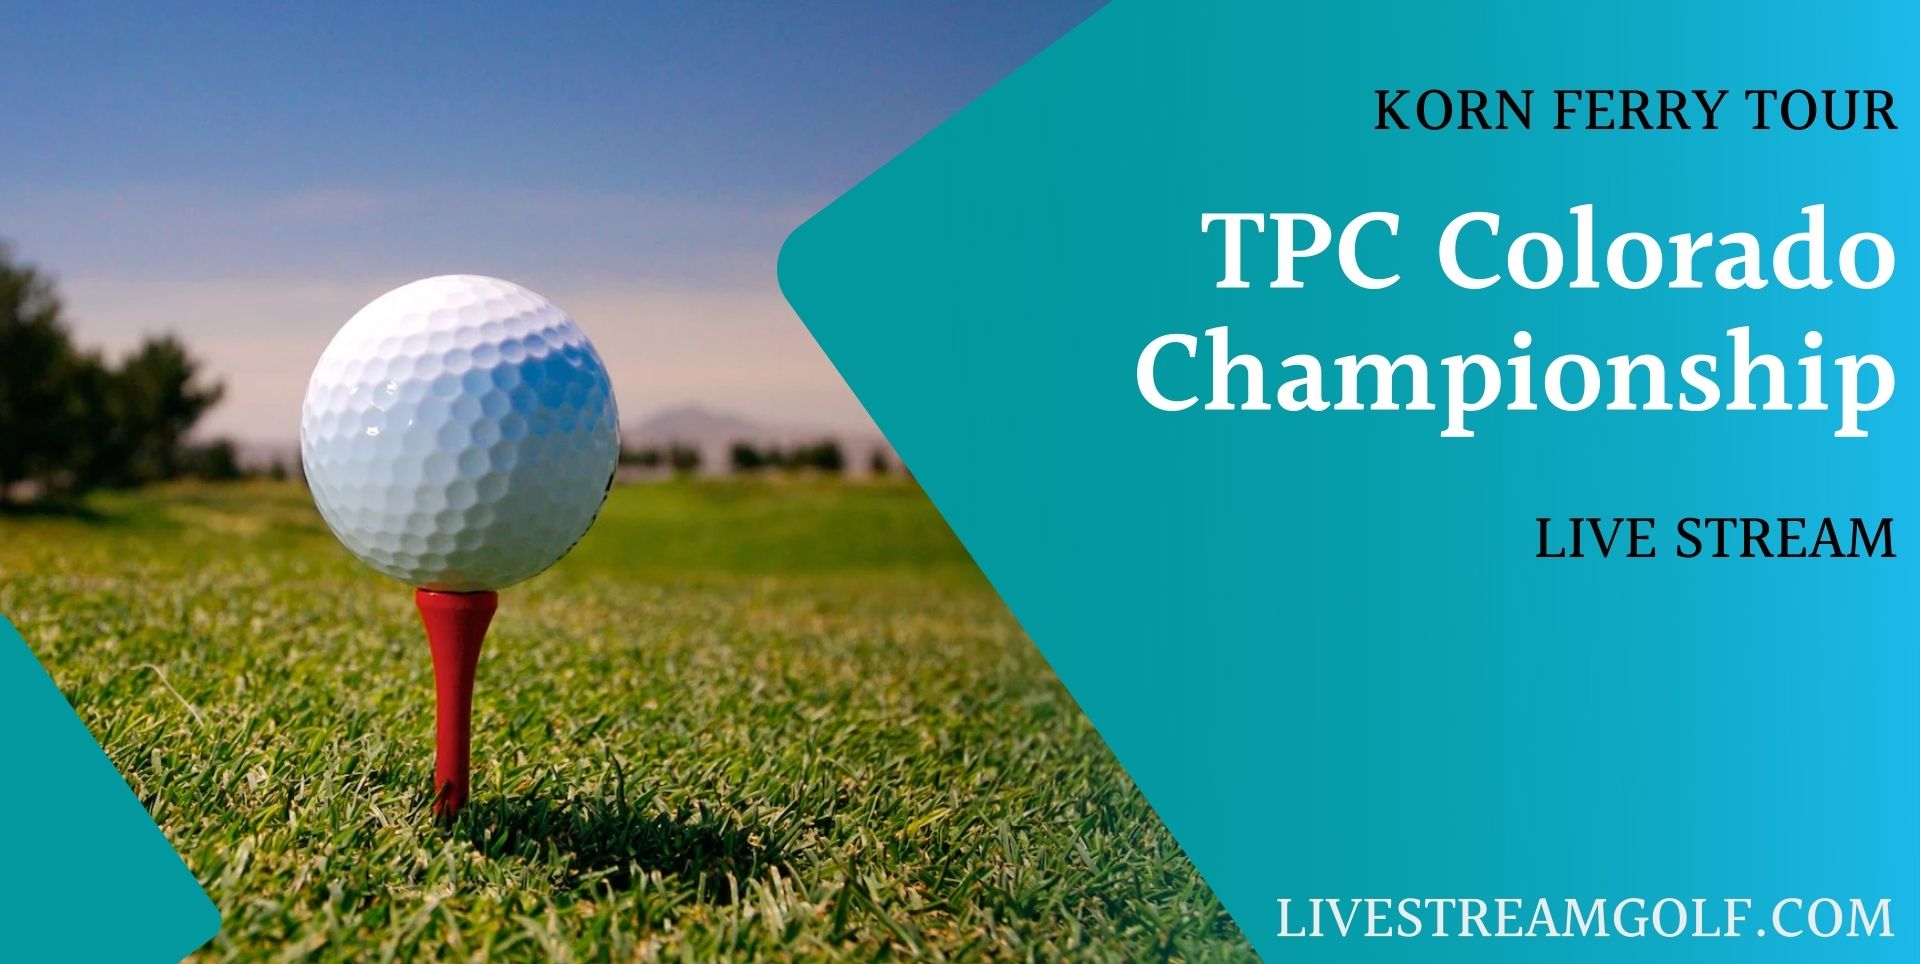 TPC Colorado Championship Day 4 Live Stream: Korn Ferry 2022